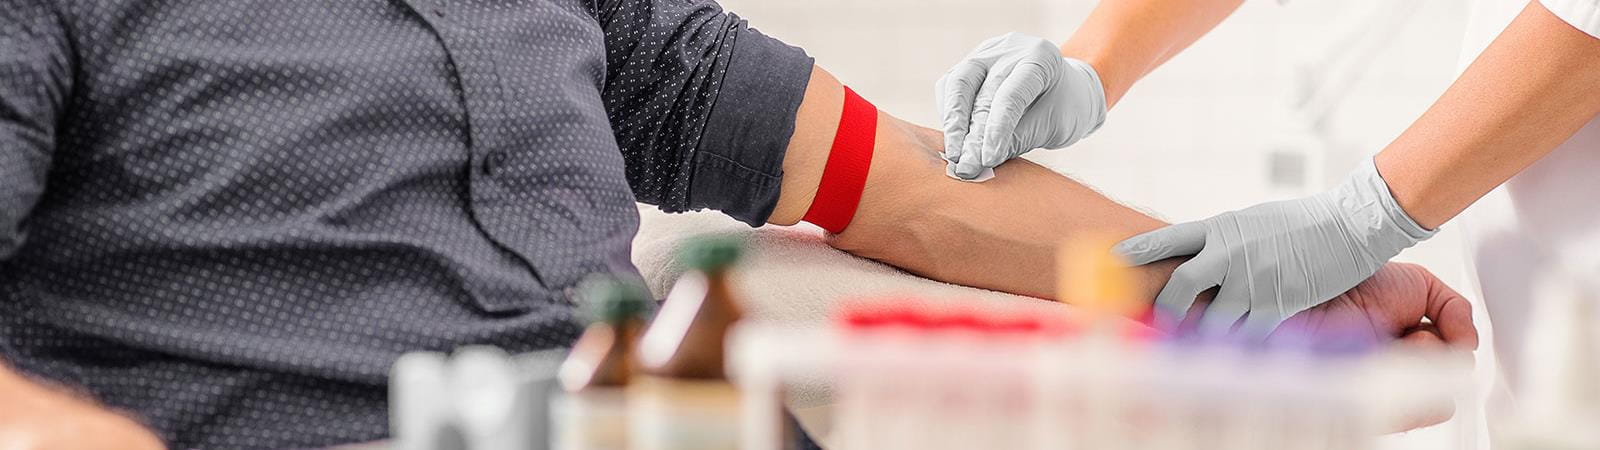 Nurse swabbing male patient arm for a blood test